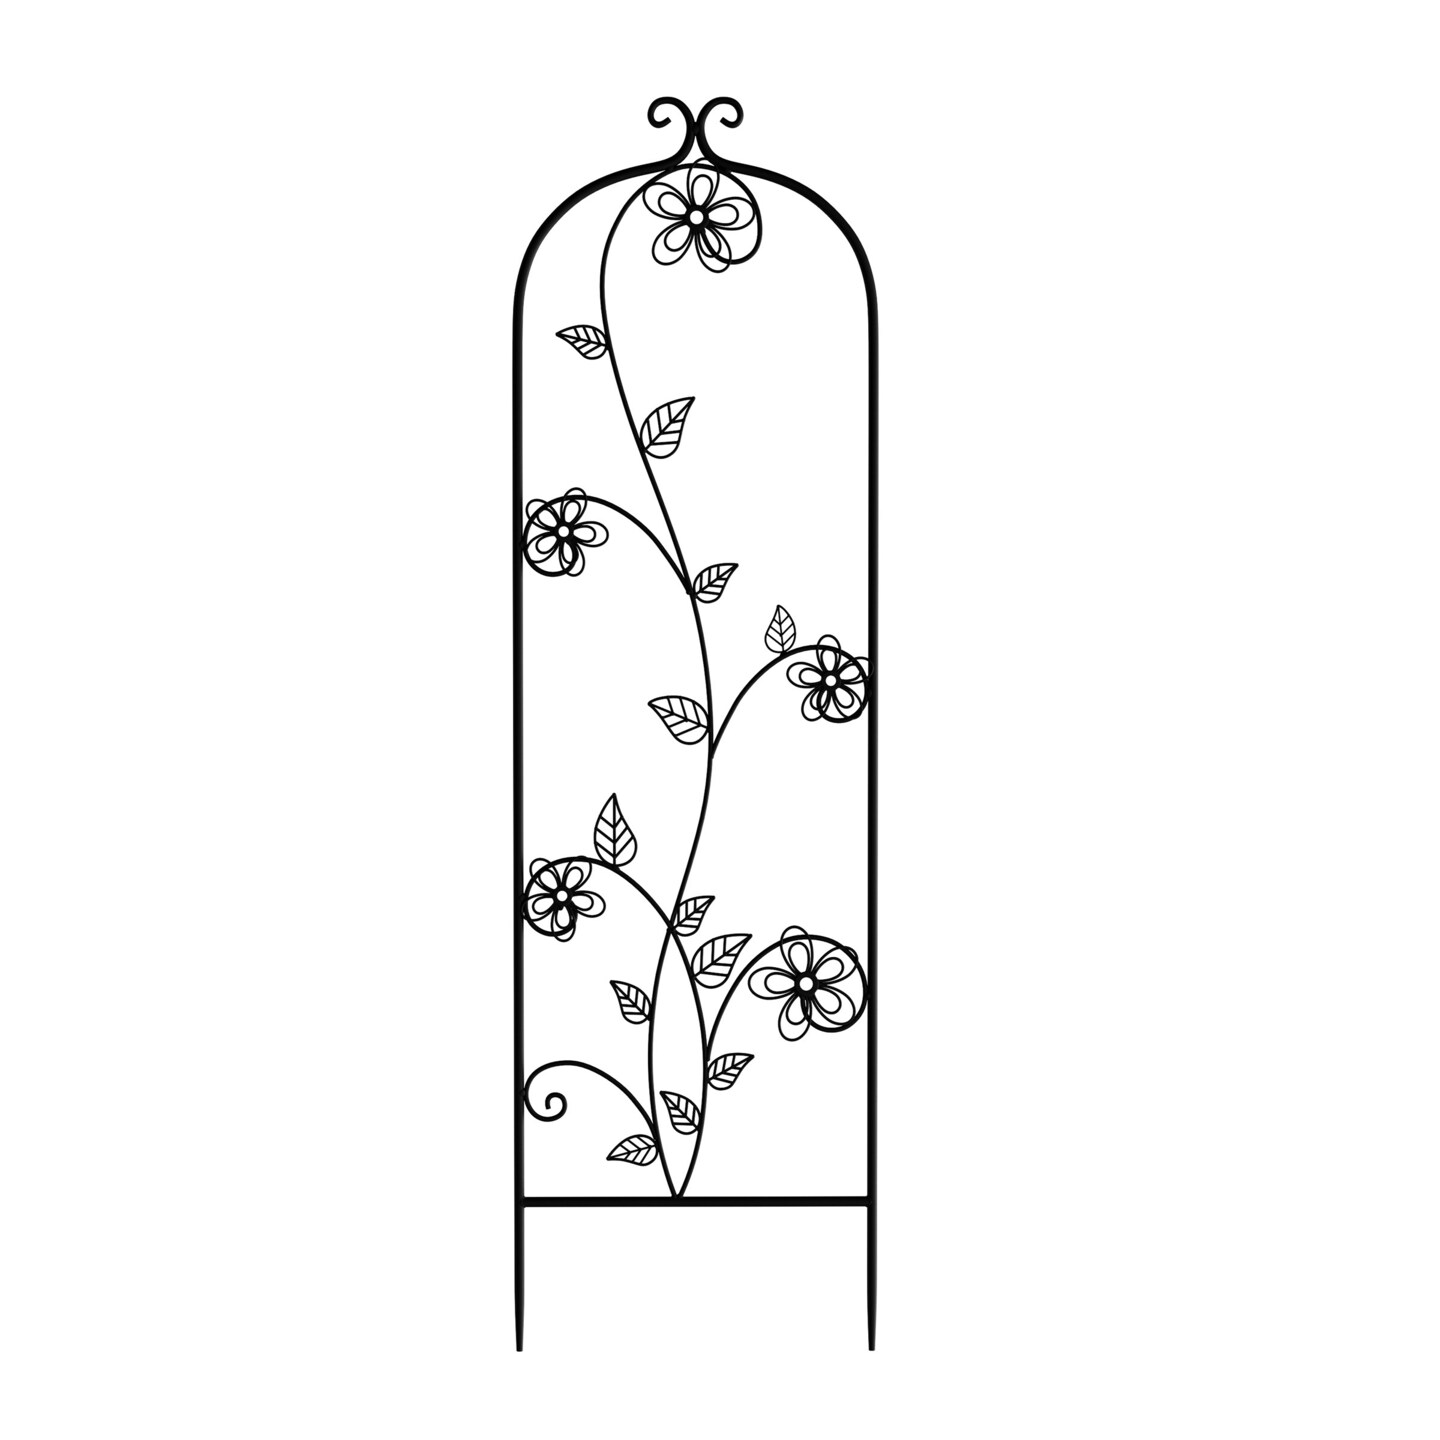 Pure Garden Garden Trellis- For Climbing Plants- Decorative Black Curving Flower Stem Metal Panel -For Vines Roses Vegetable Plants